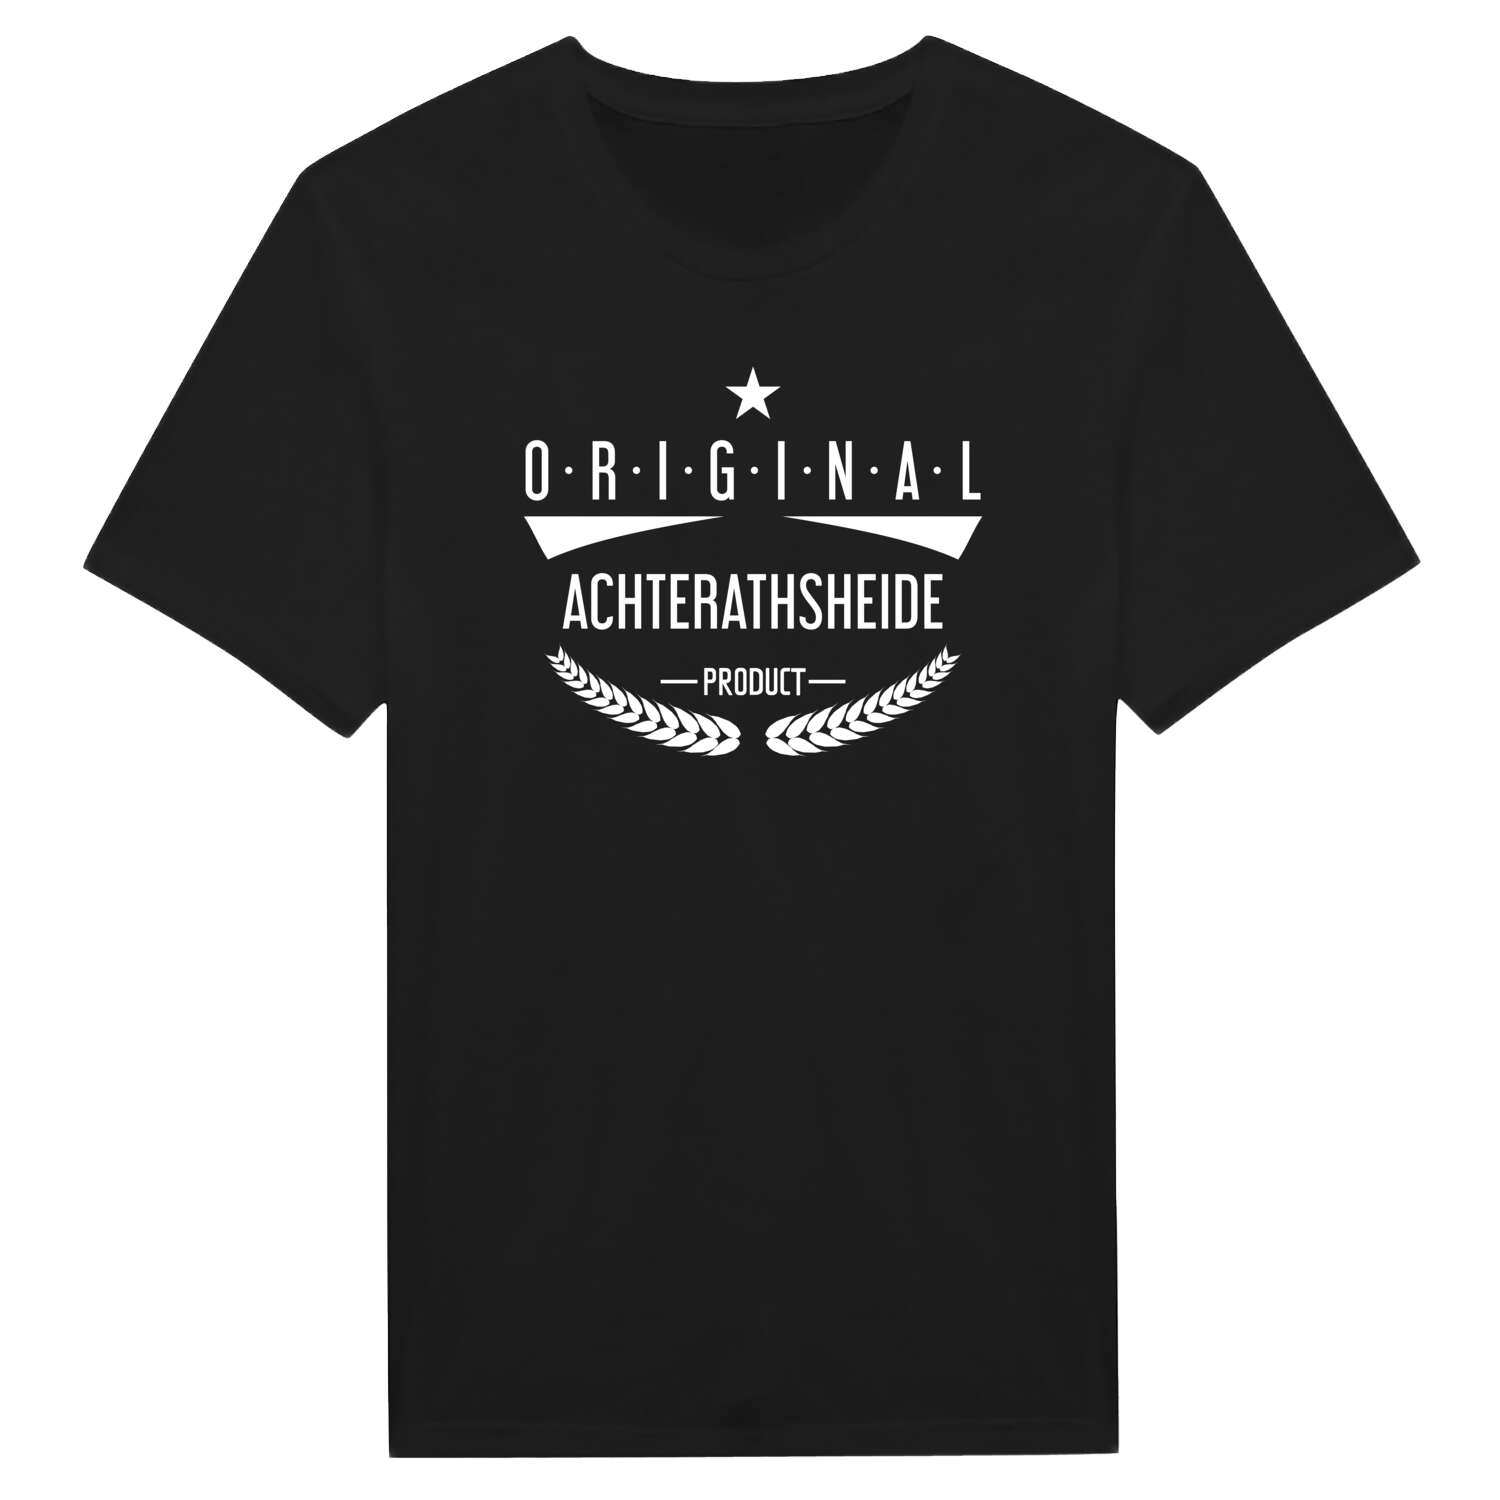 Achterathsheide T-Shirt »Original Product«